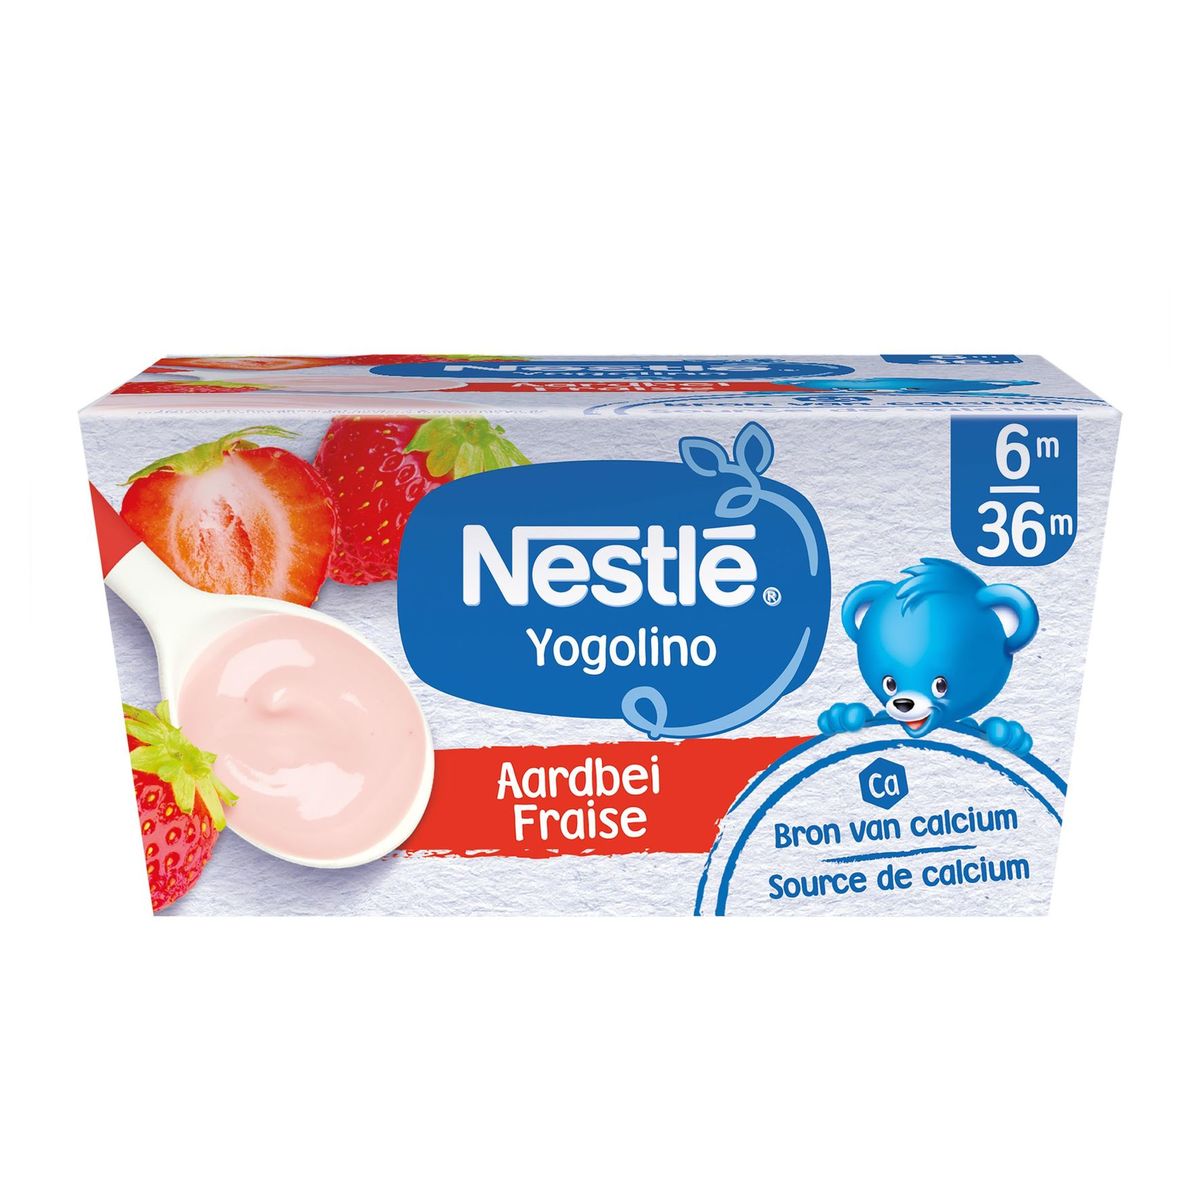 Nestlé Yogolino Melkdessert Aardbei vanaf 6 maanden 4x100g